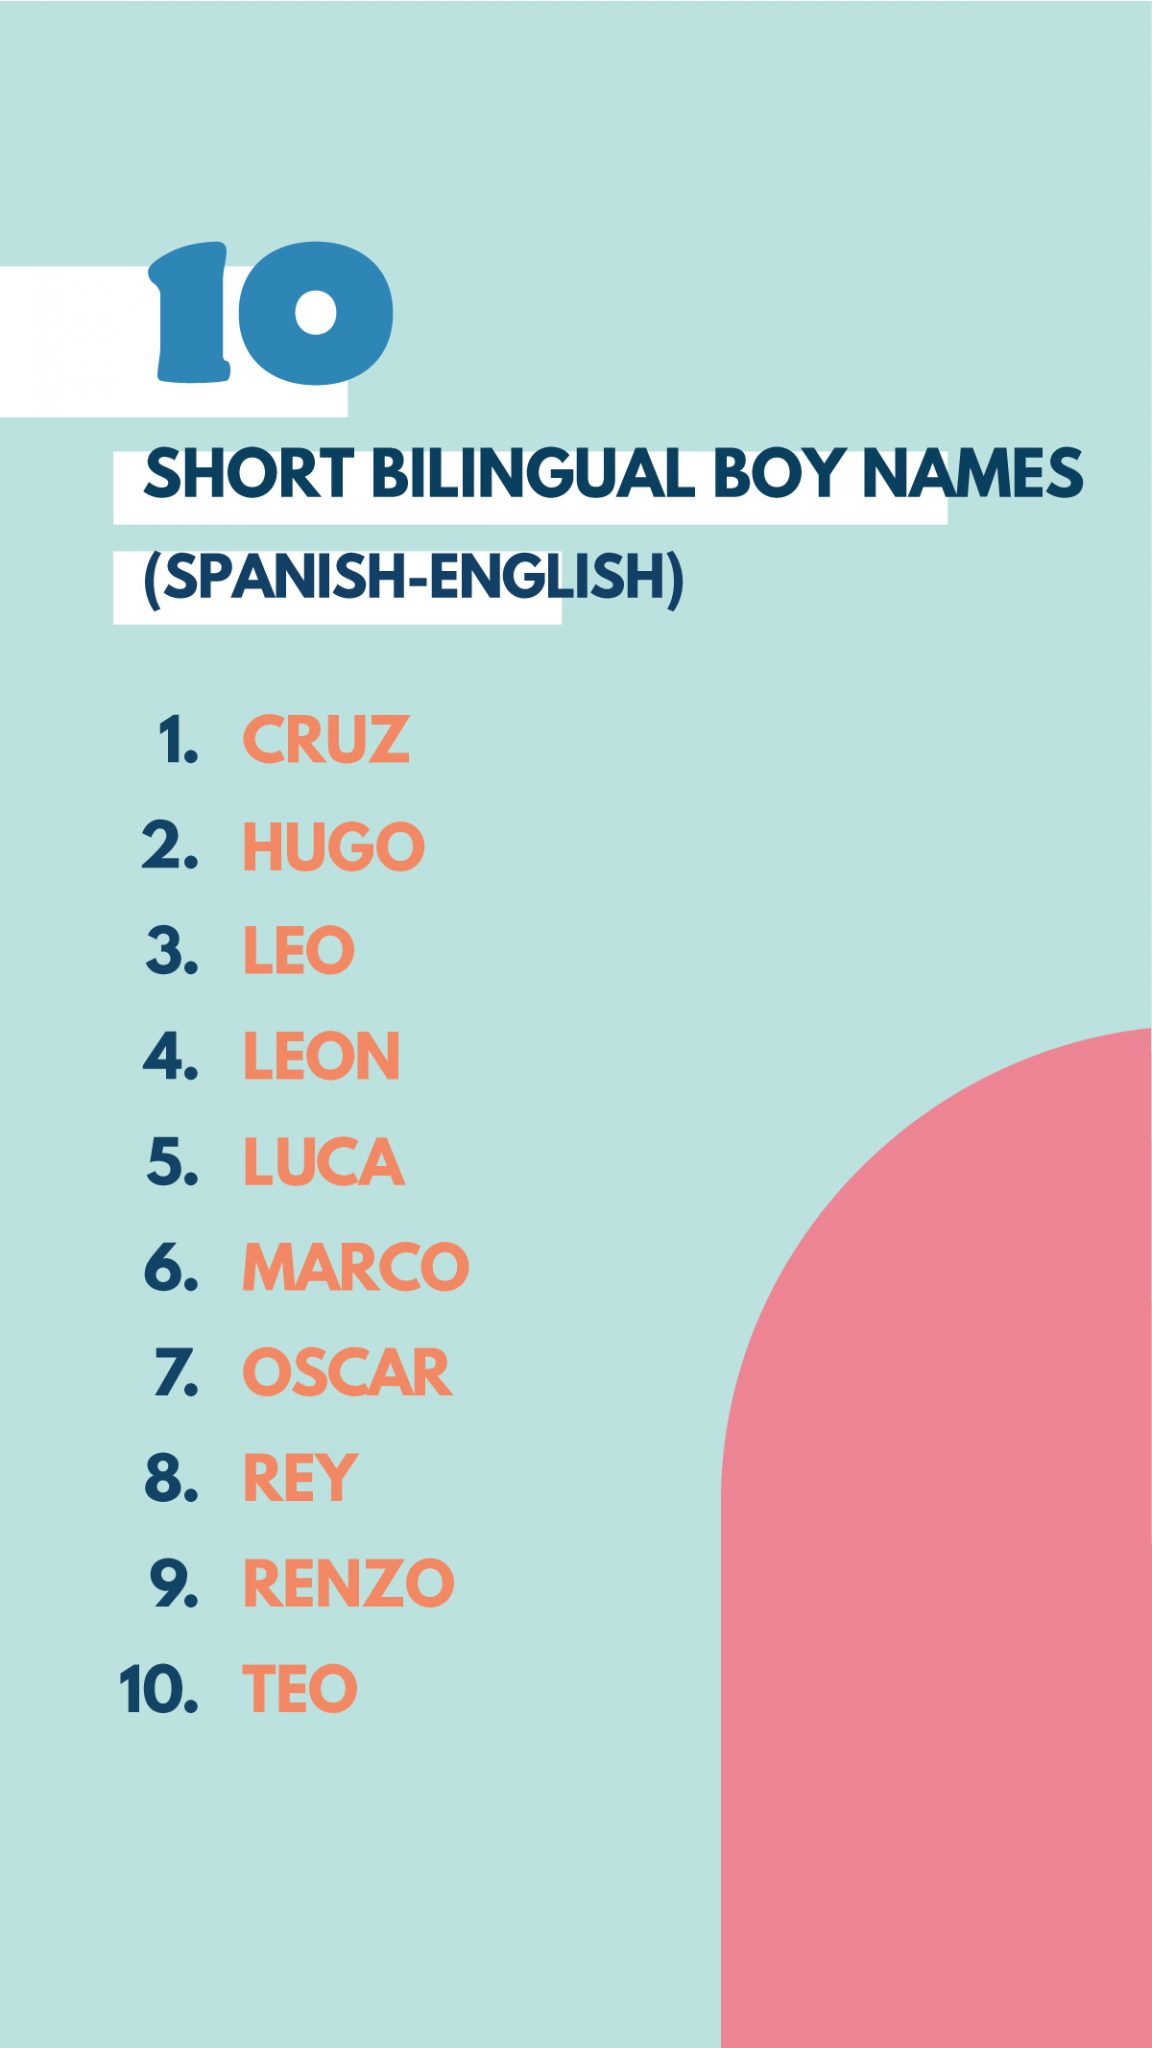 Bilingual Boy Names (Names That Work in Spanish + English) - Studio DIY